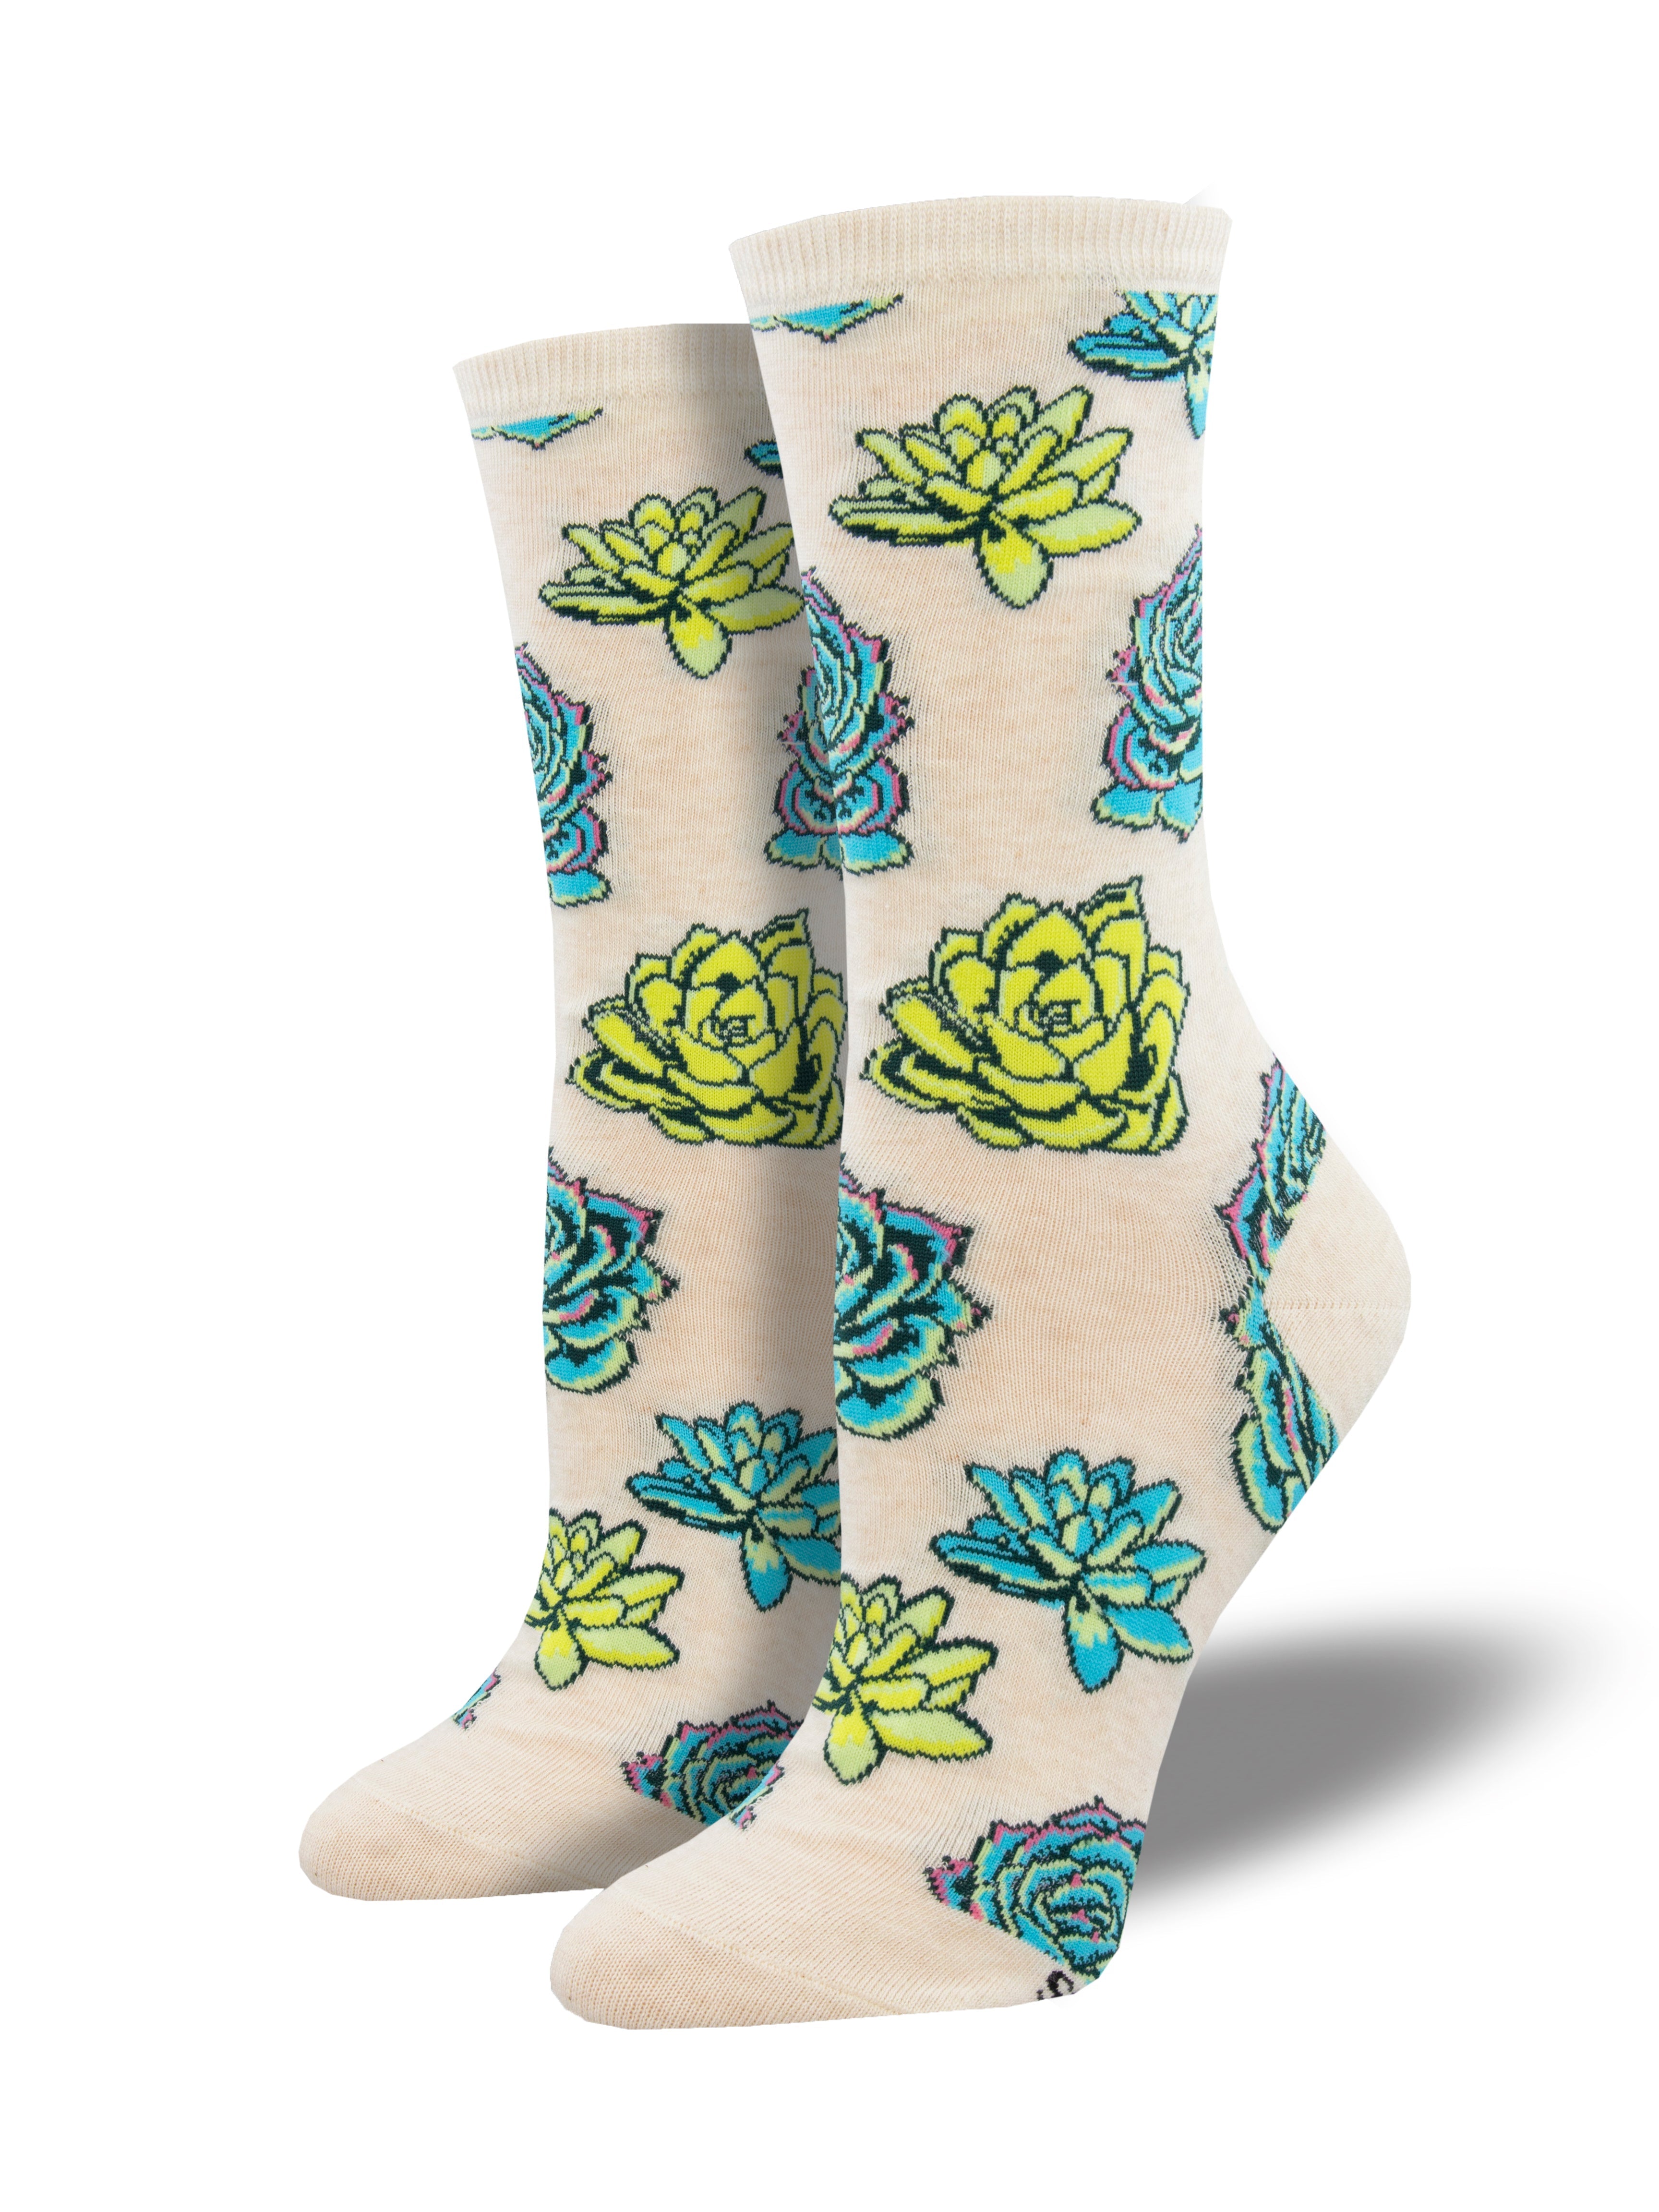 Women's "Succulents" Socks